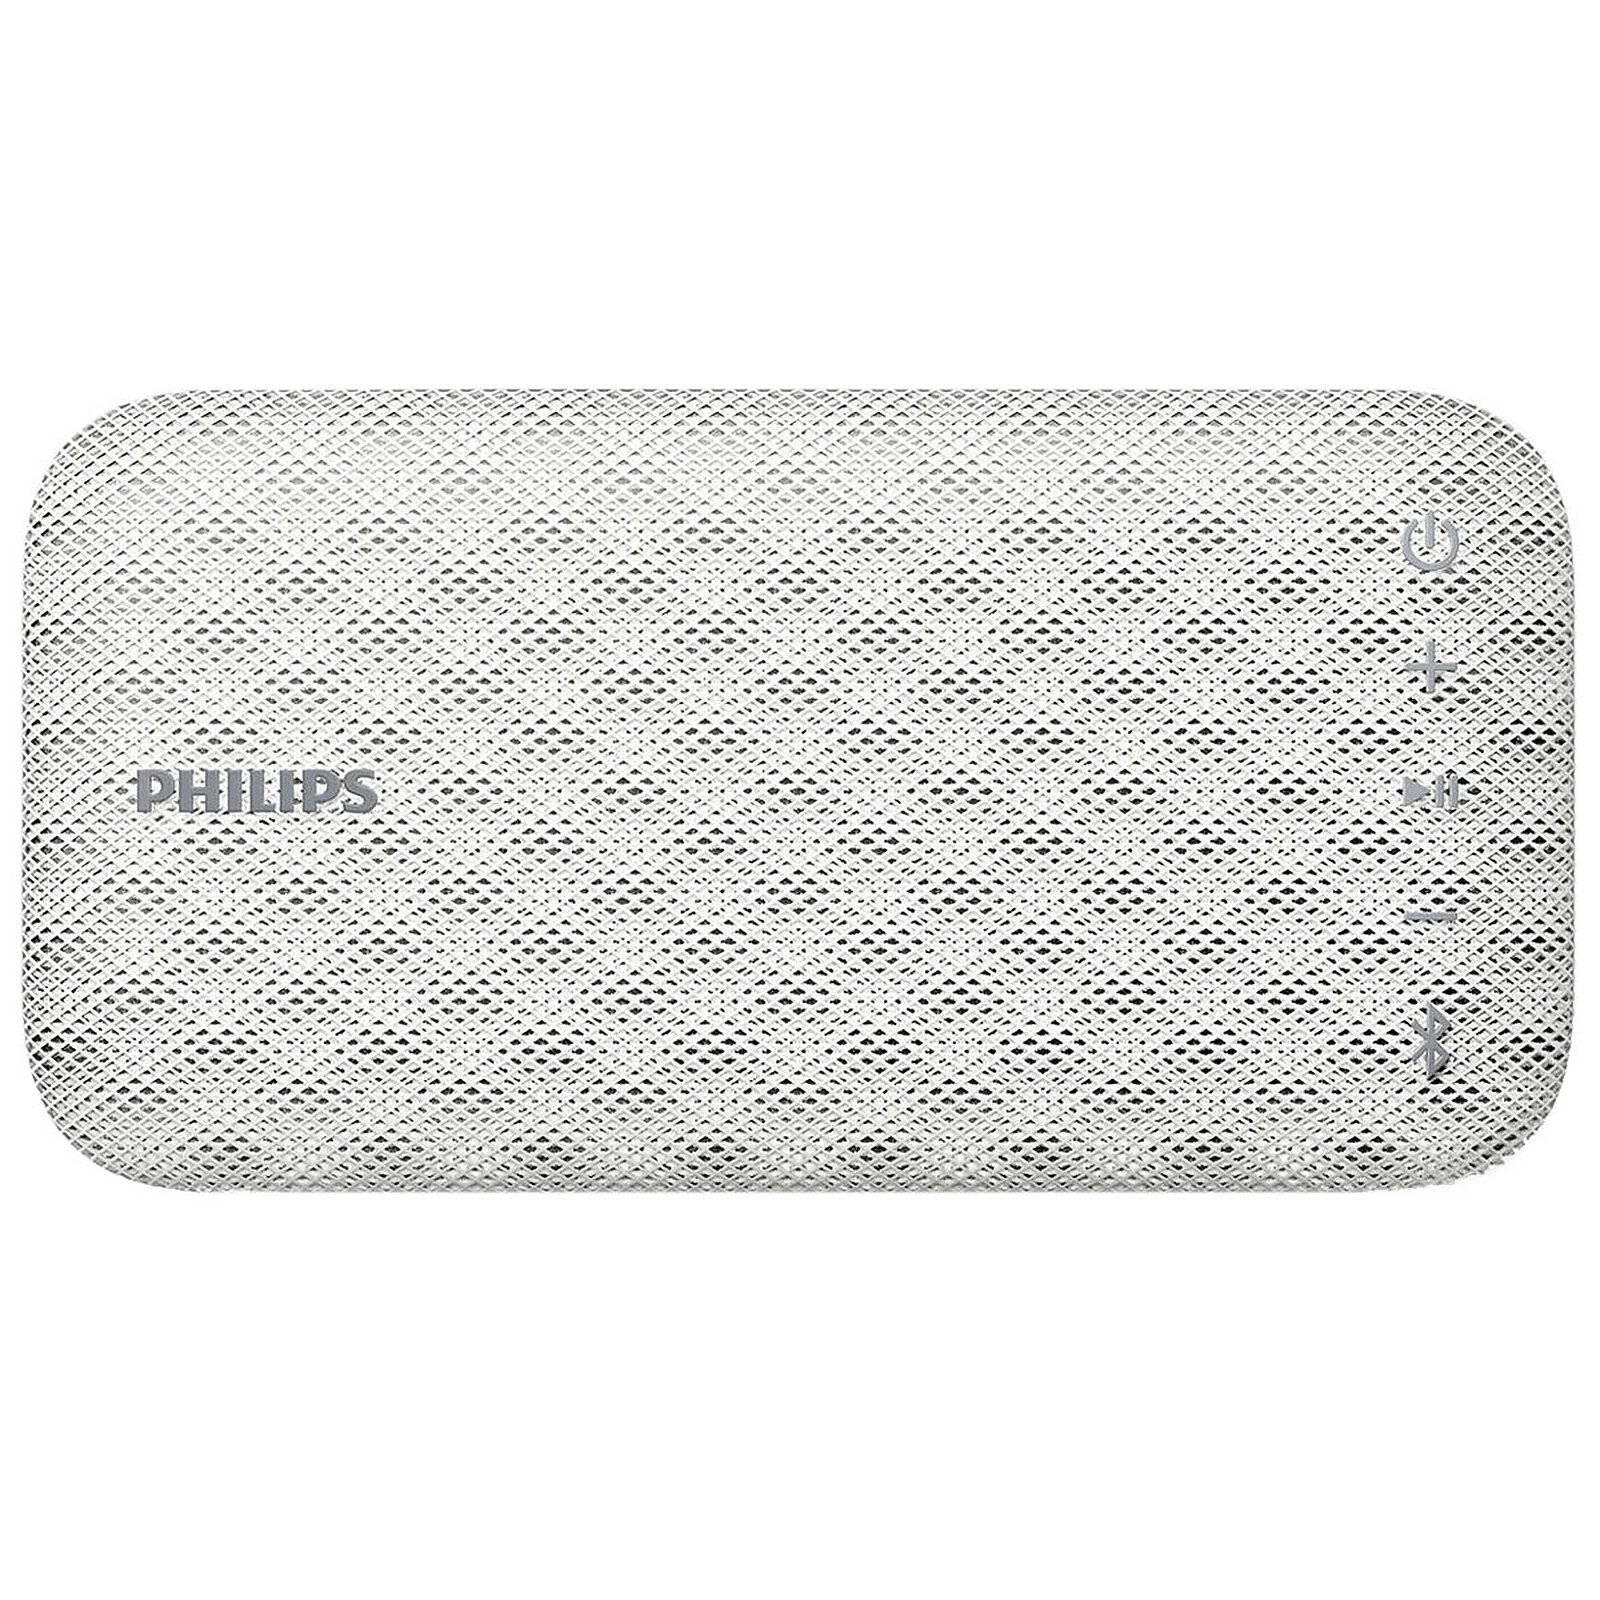 Enceinte Bluetooth Philips Blanche - BT3900W/00